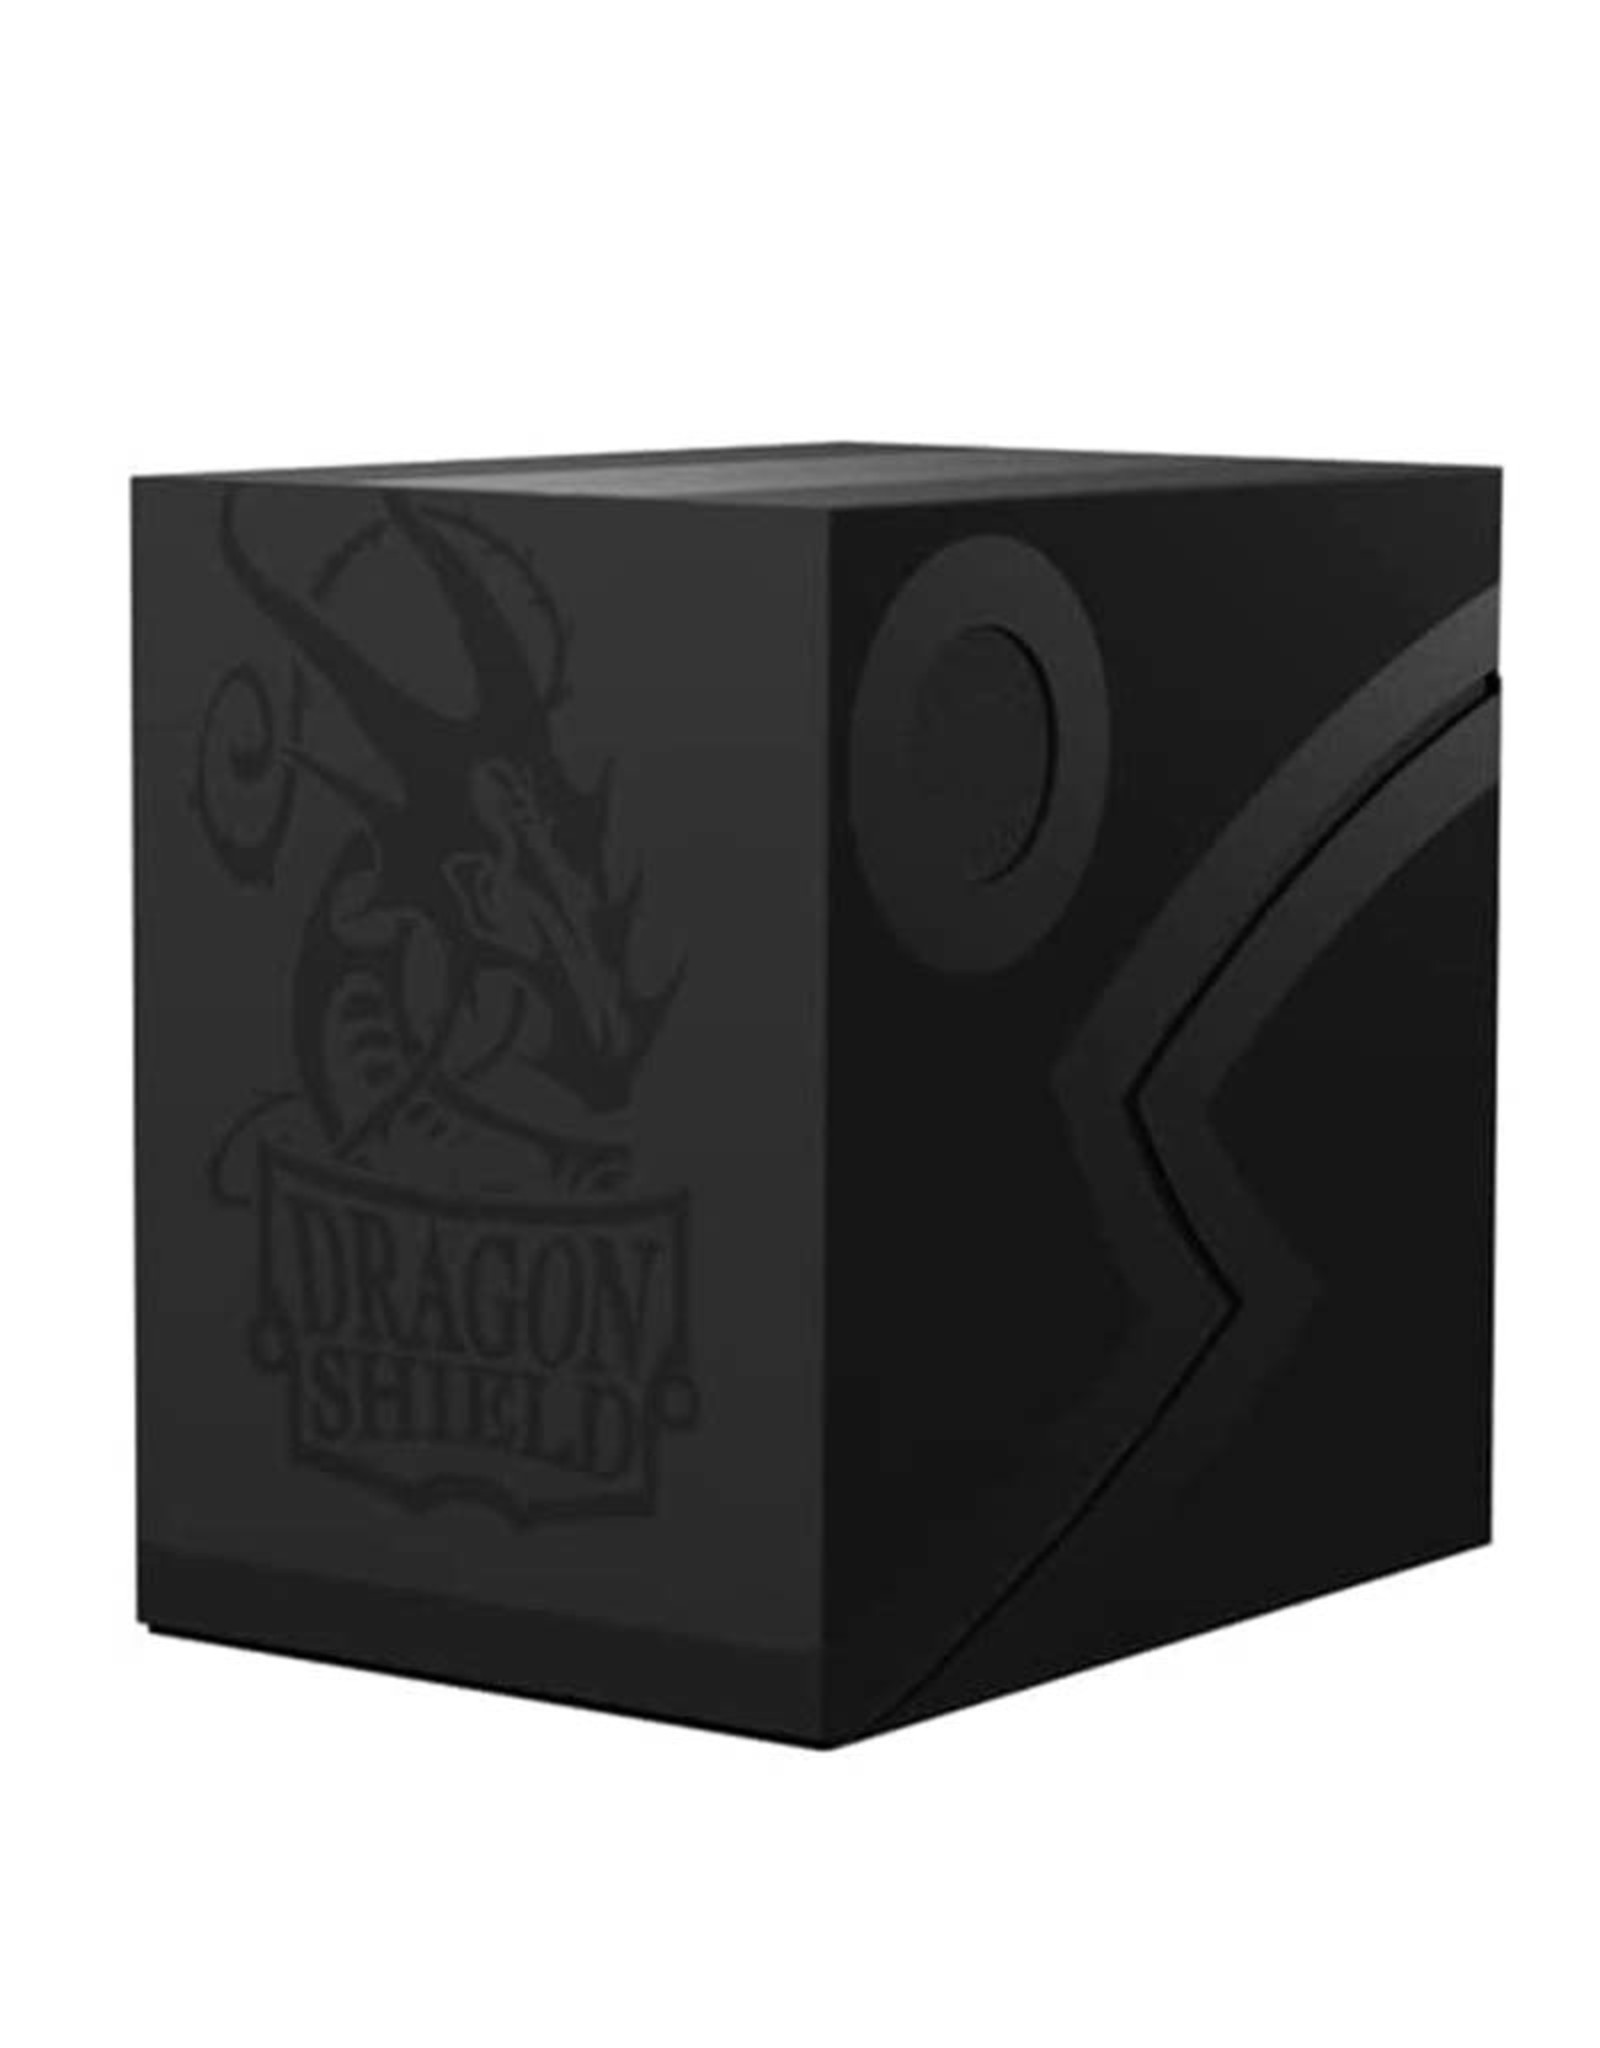 Arcane TinMen Dragon Shield: Double Shell - Shadow Black